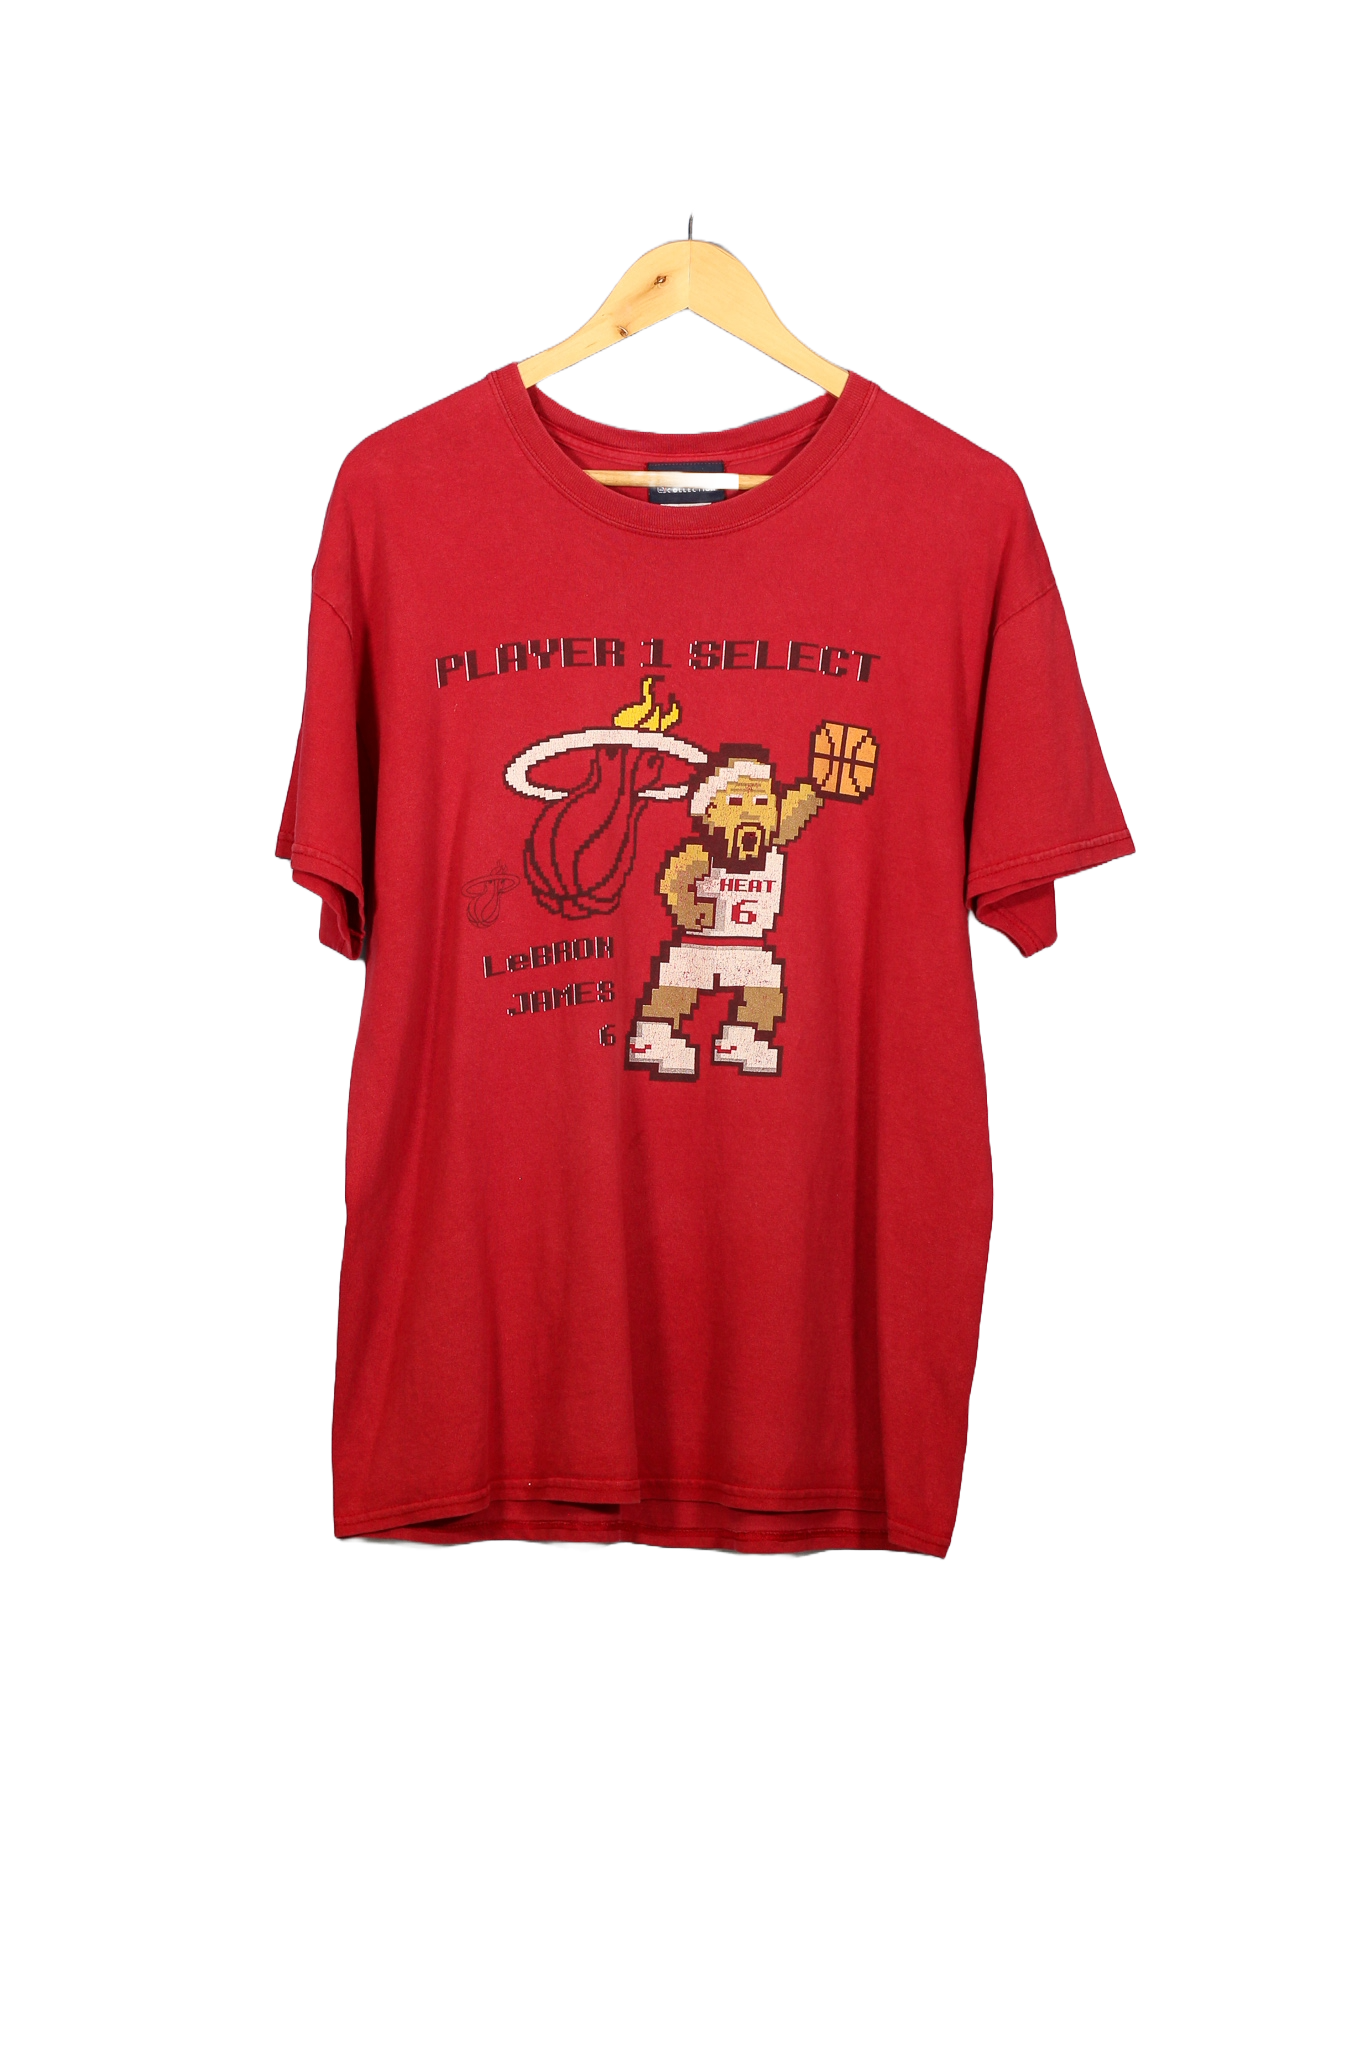 Miami Heat Lebron James NBA T-Shirt - L